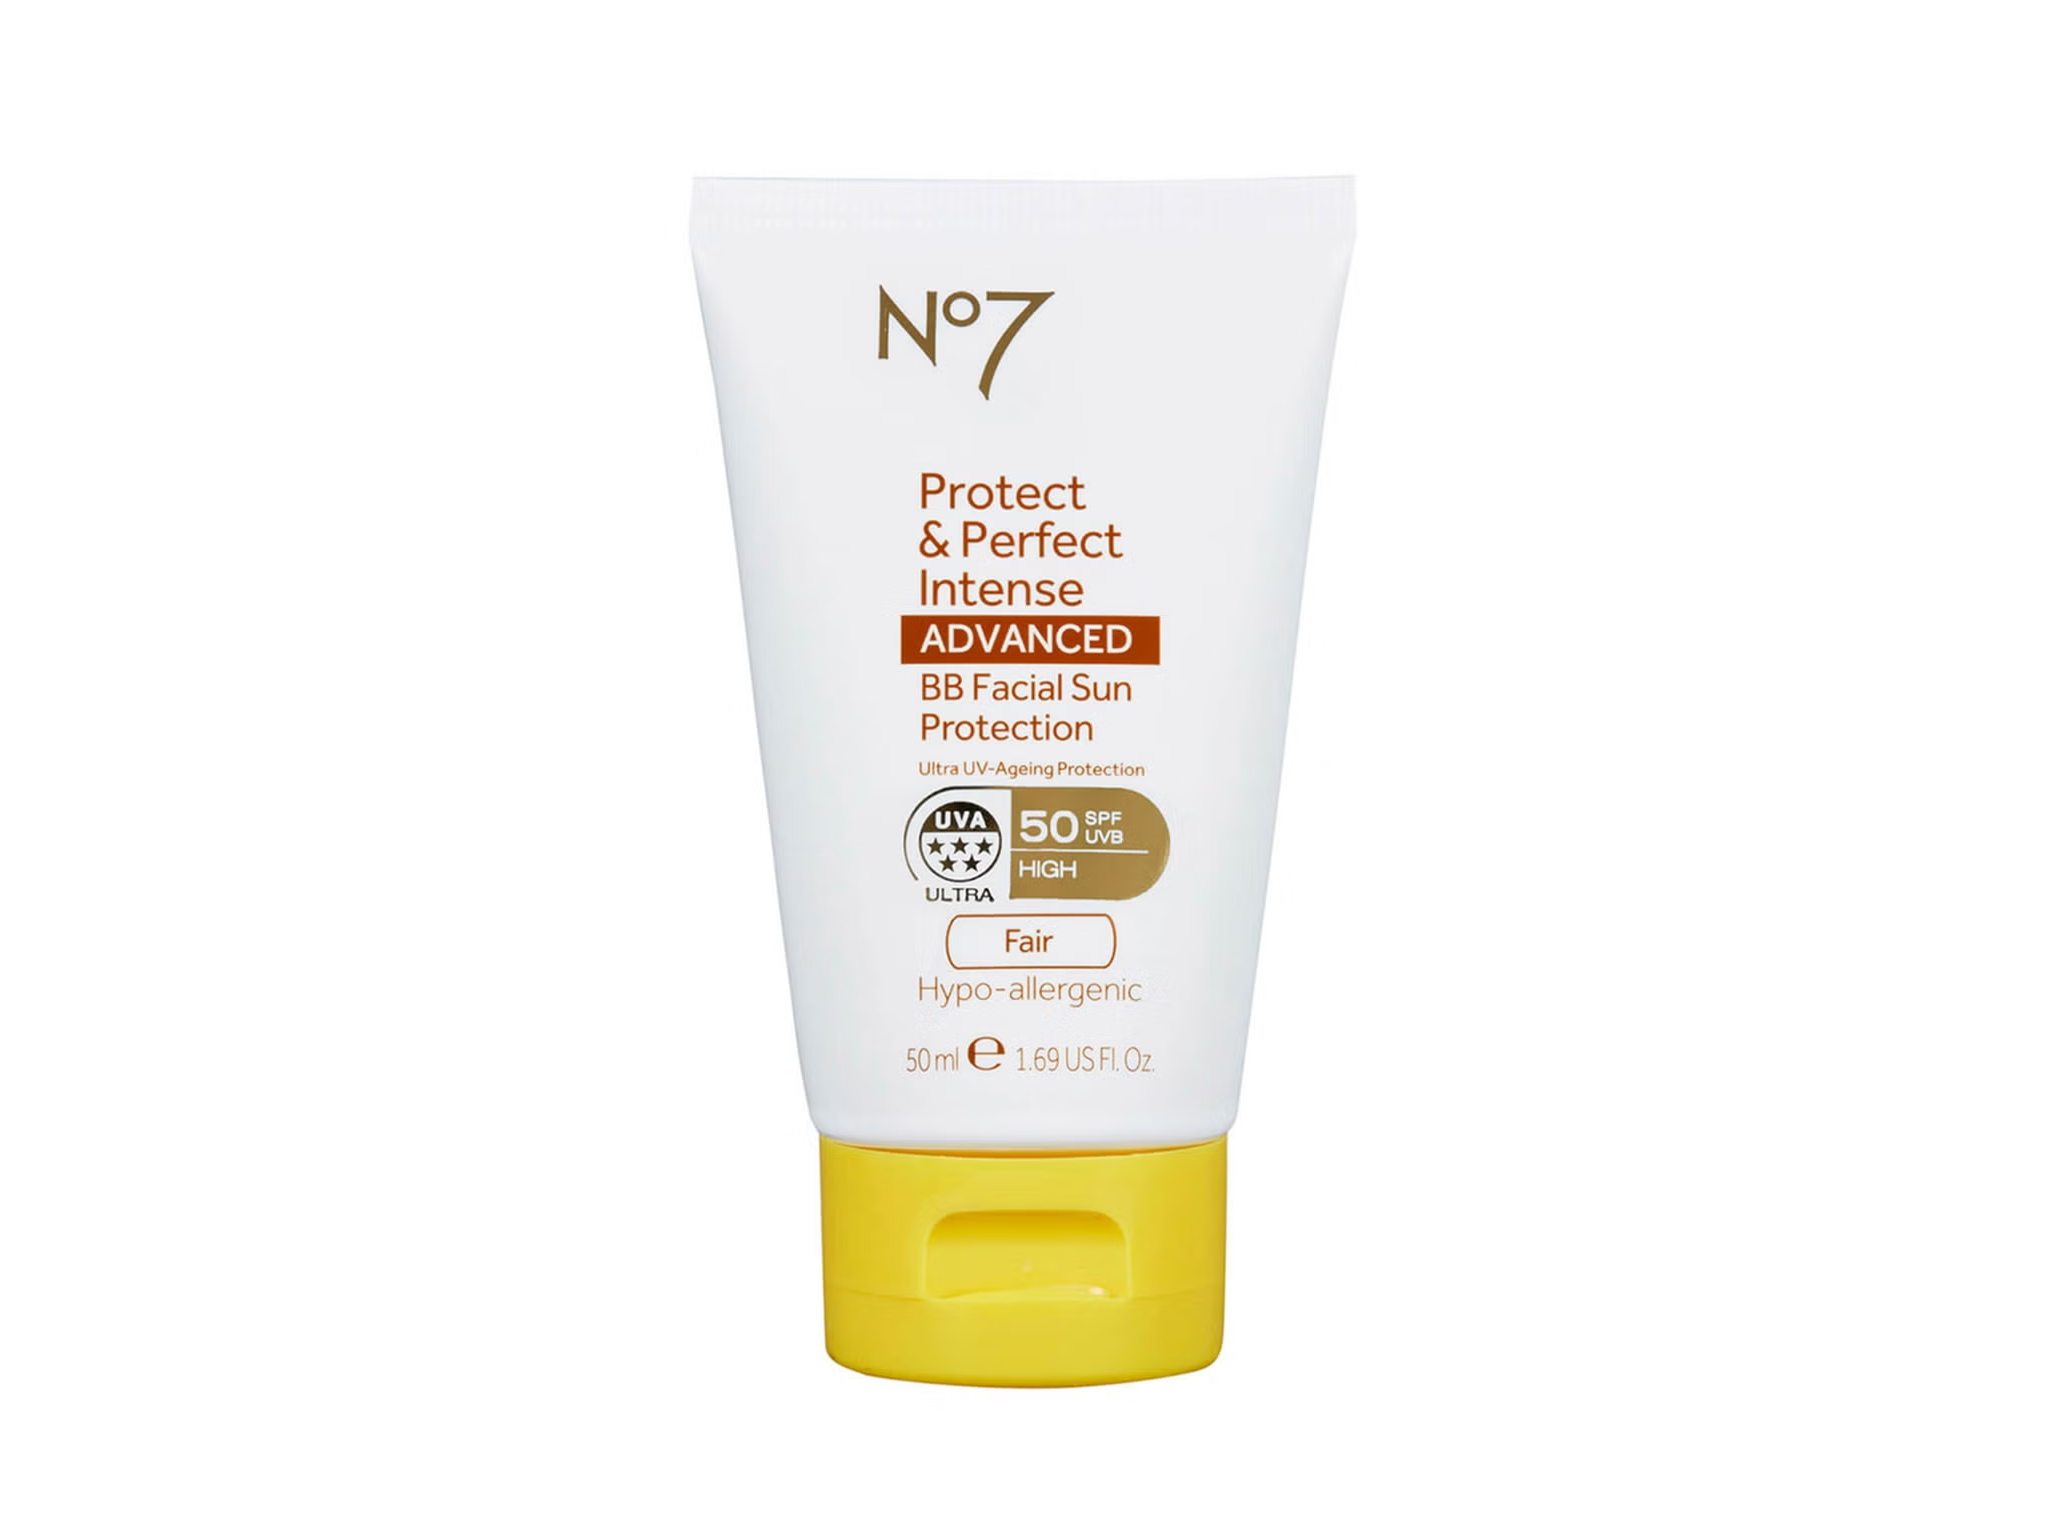 No7 protect and perfect intense advanced BB facial sun protection